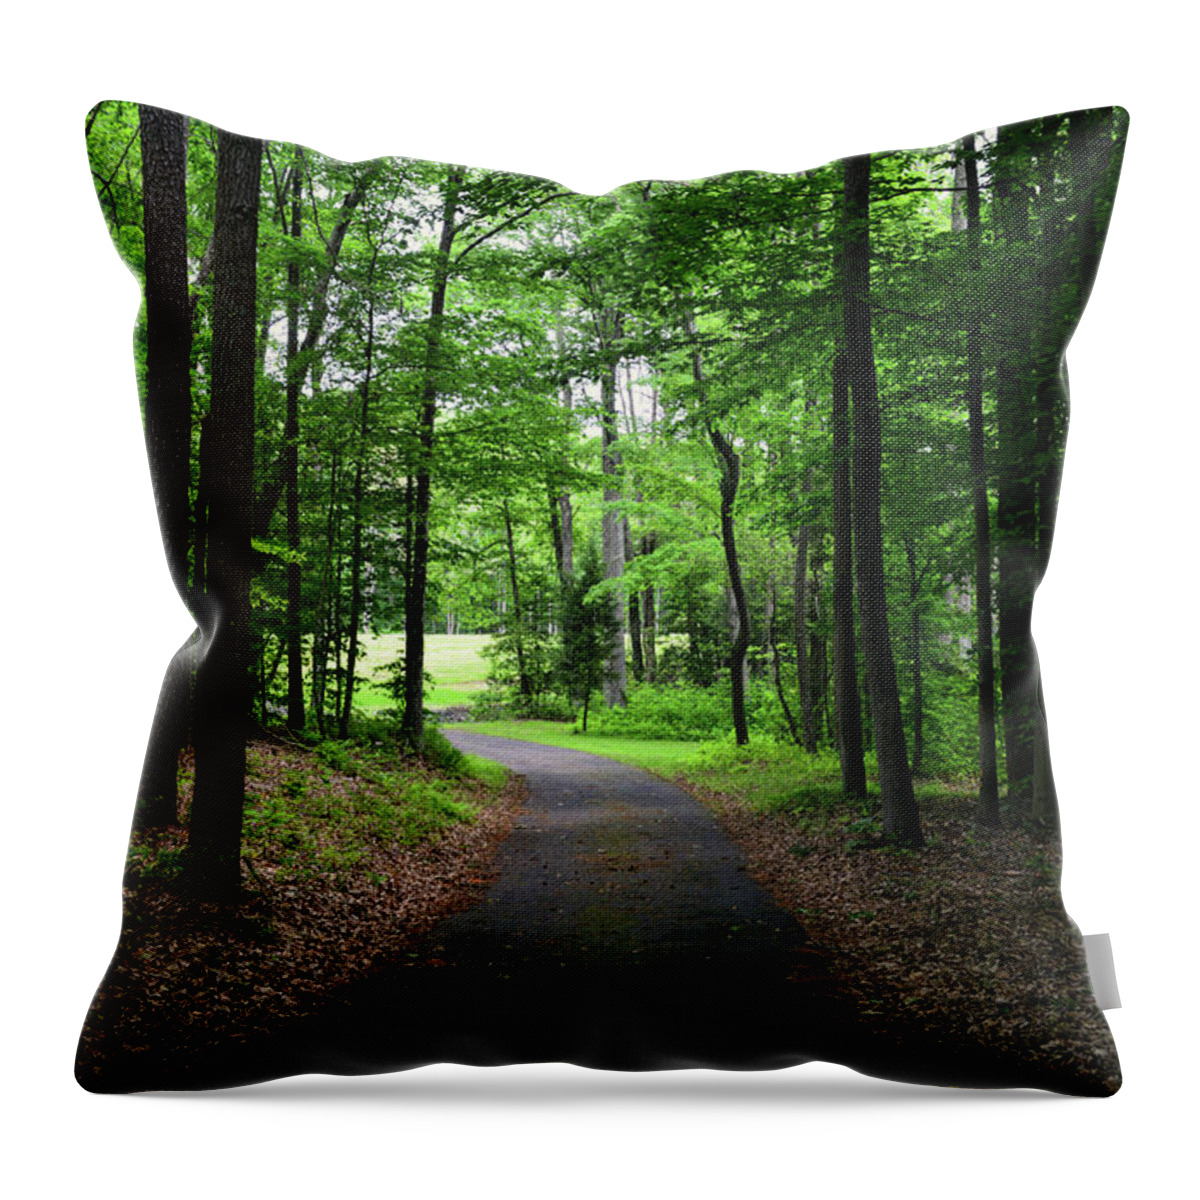  Throw Pillow featuring the photograph Buckner Farm Path by Dana Sohr